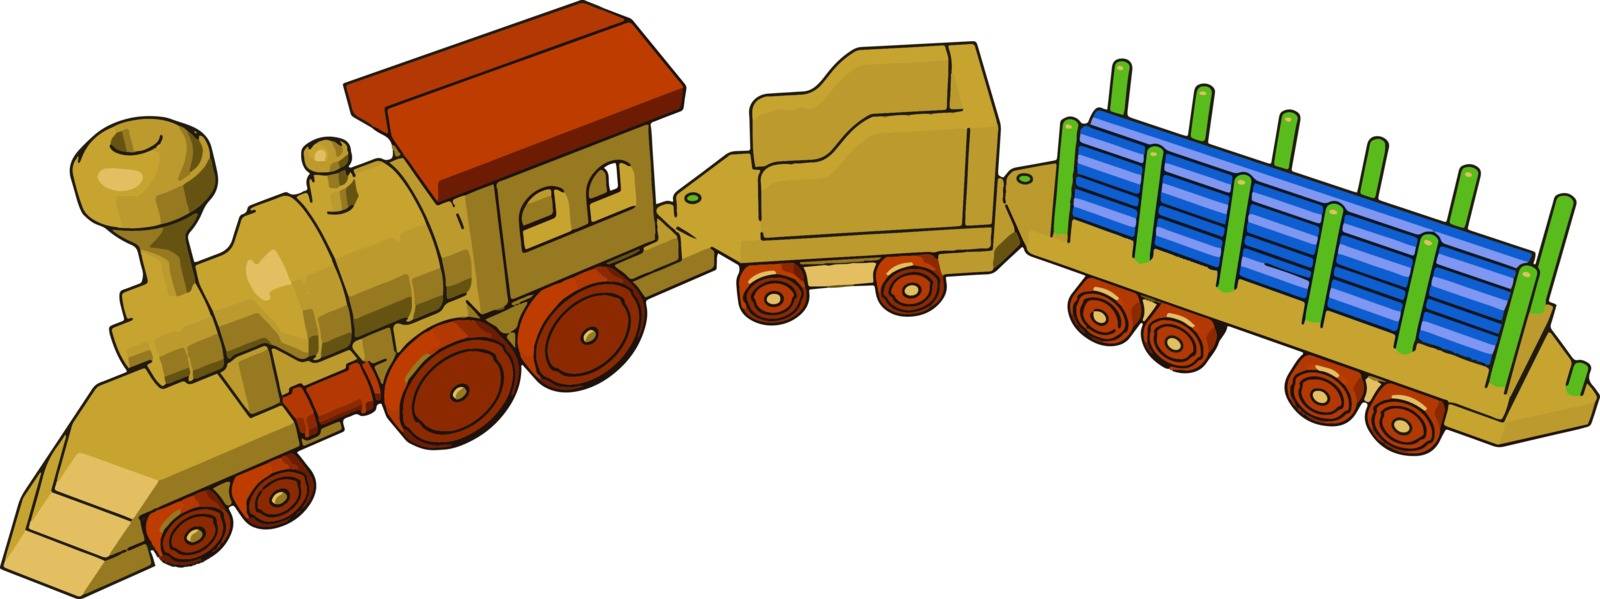 Little train toy, illustration, vector on white background.